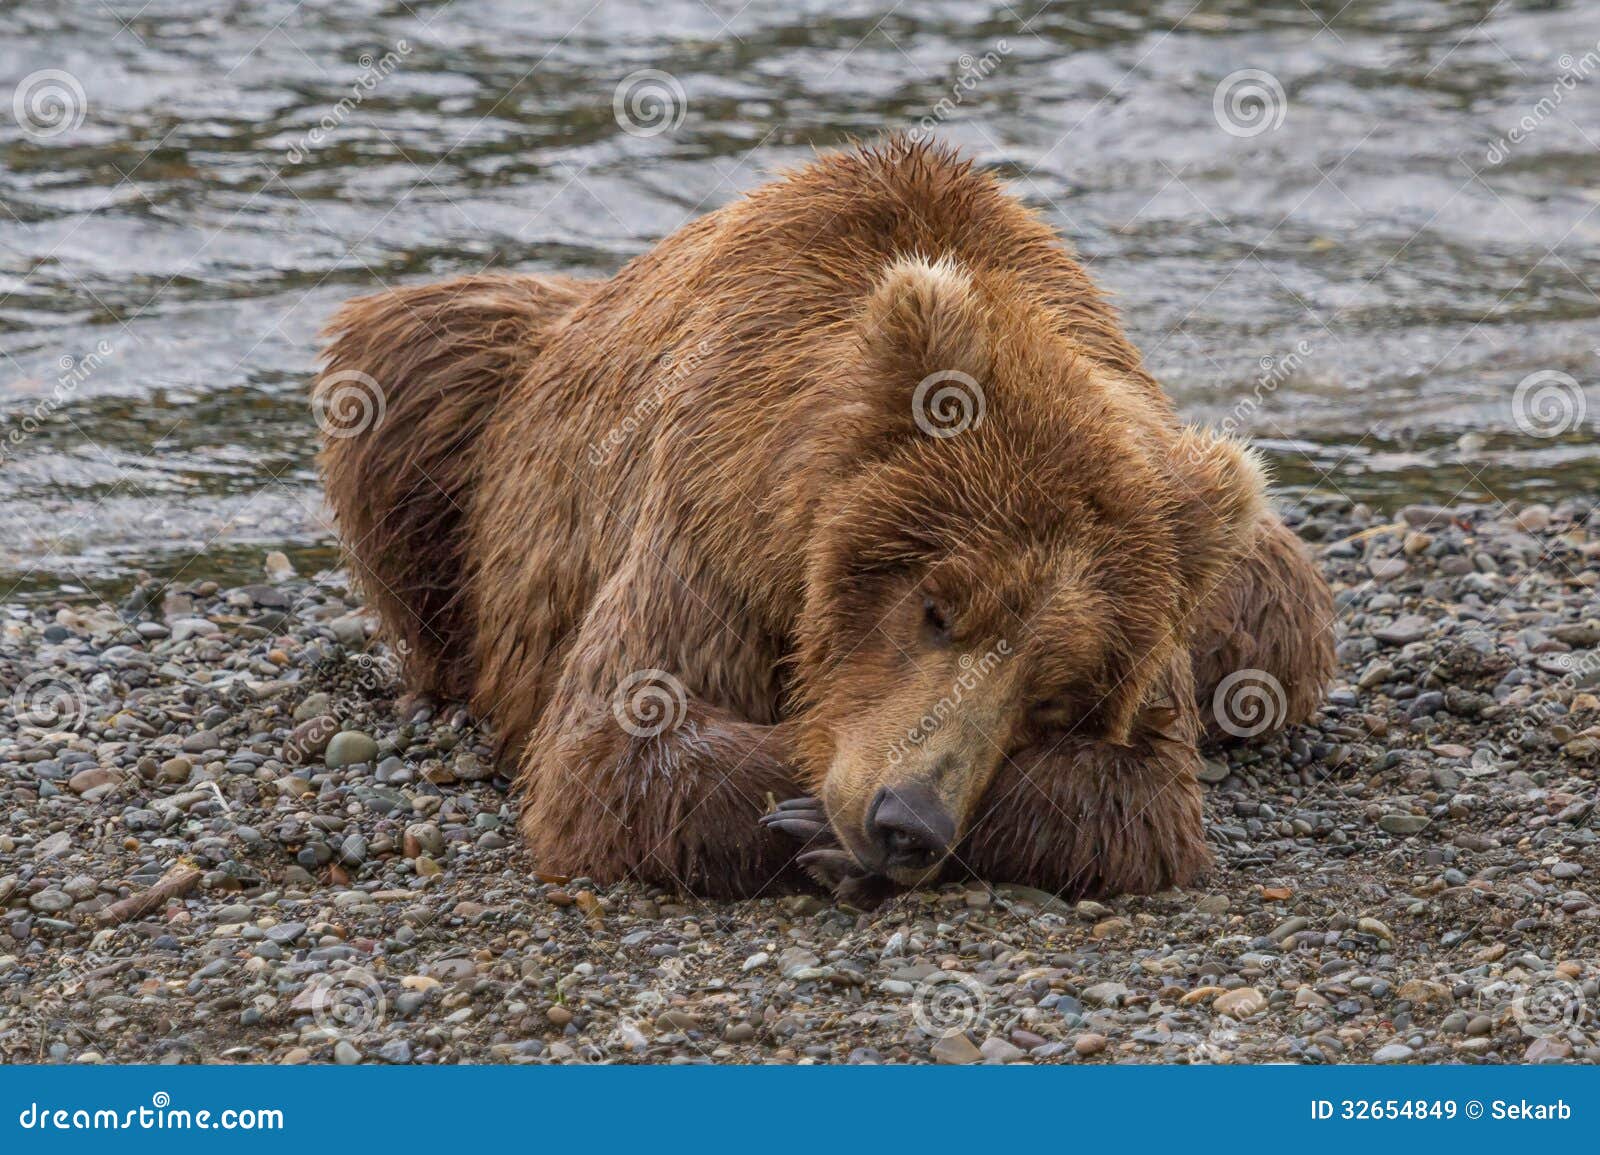 brown bear taking a nap